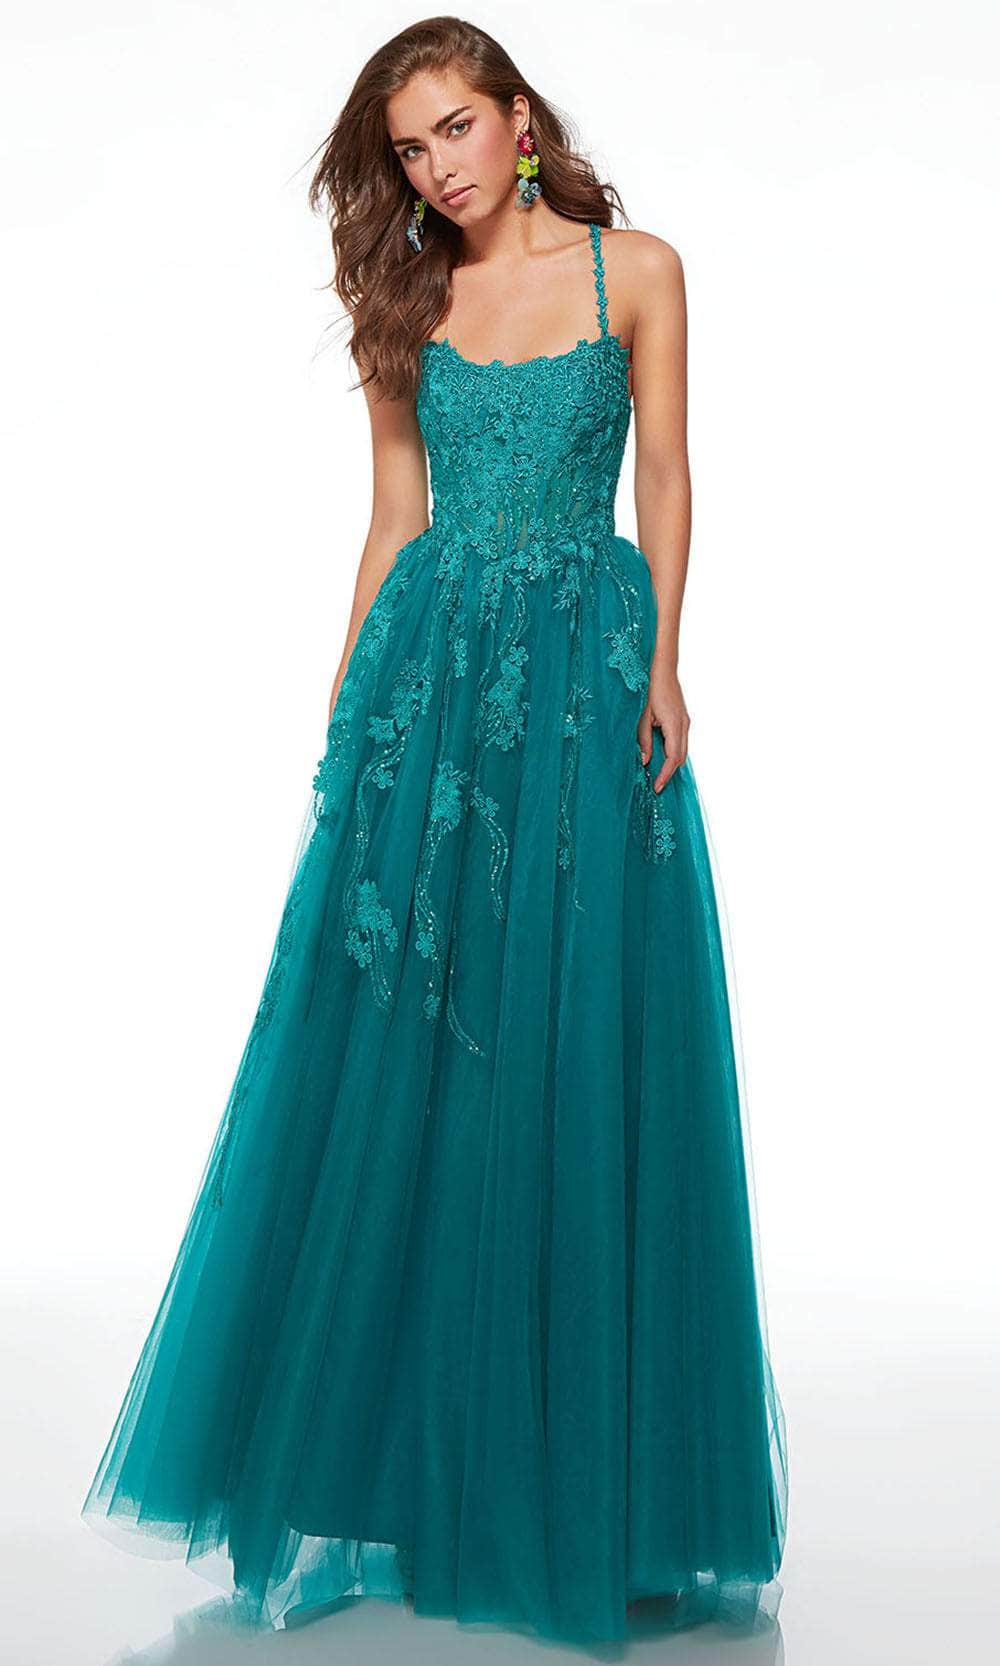 Alyce Paris 61541 - Floral Lace Applique Sleeveless Dress Special Occasion Dresses